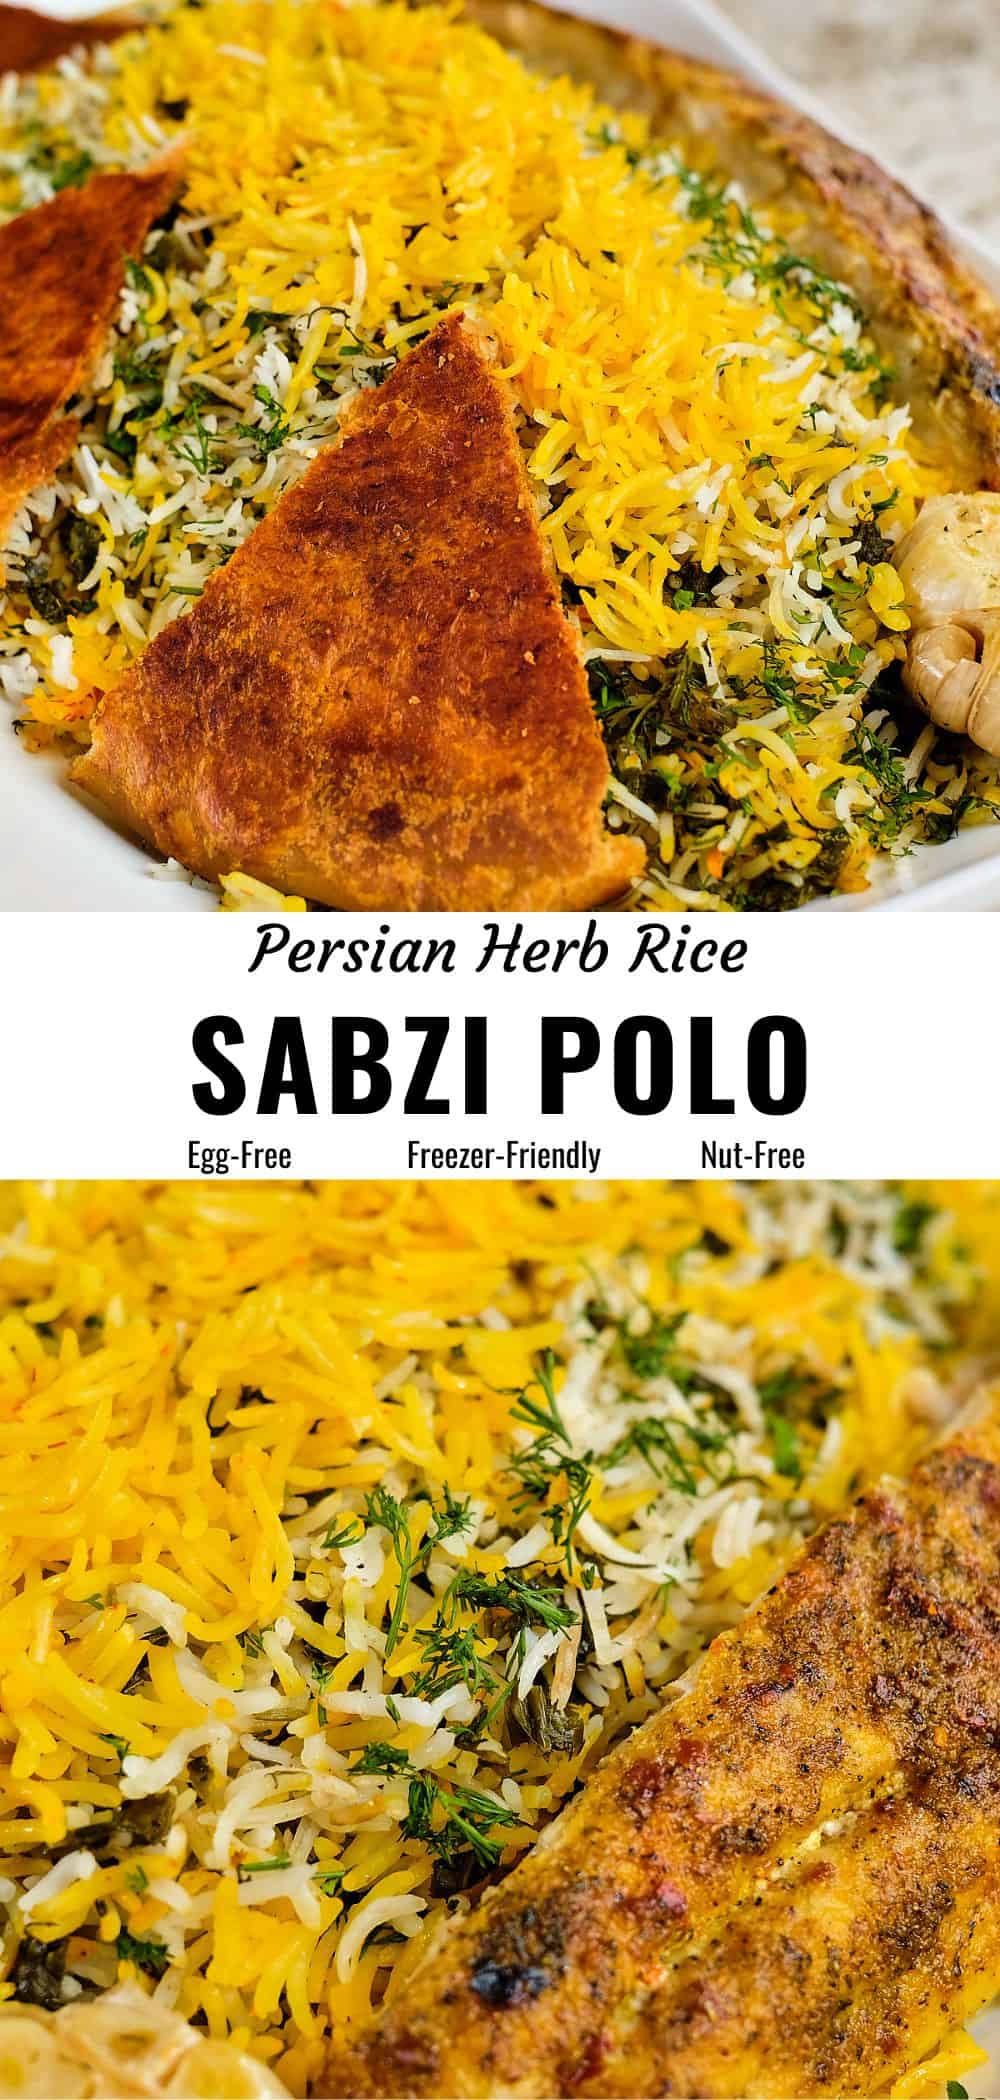 Sabzi Polo (Persian Herb Rice) - The Delicious Crescent